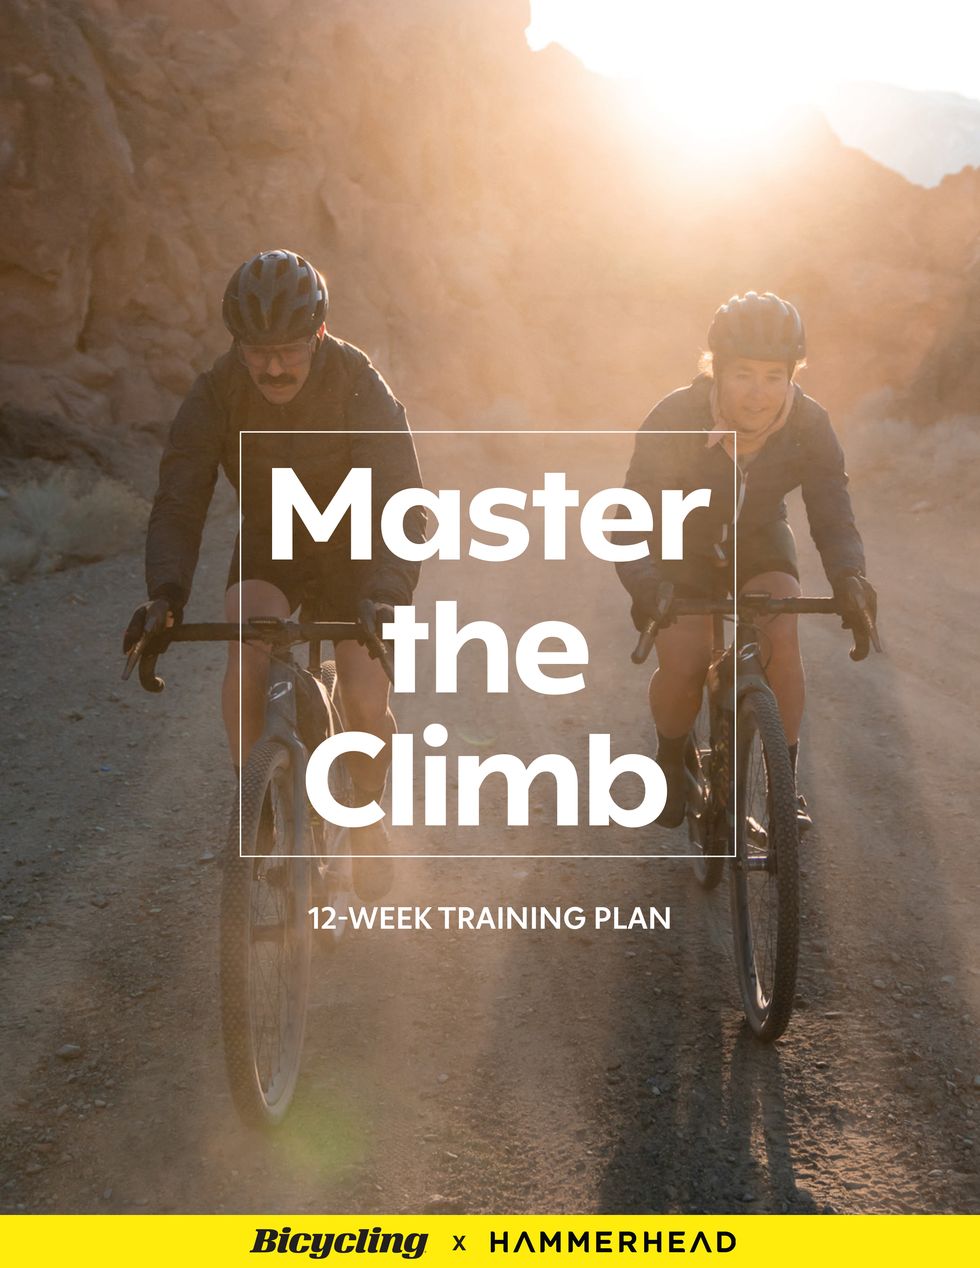 12 week training plan for more efficient climbing